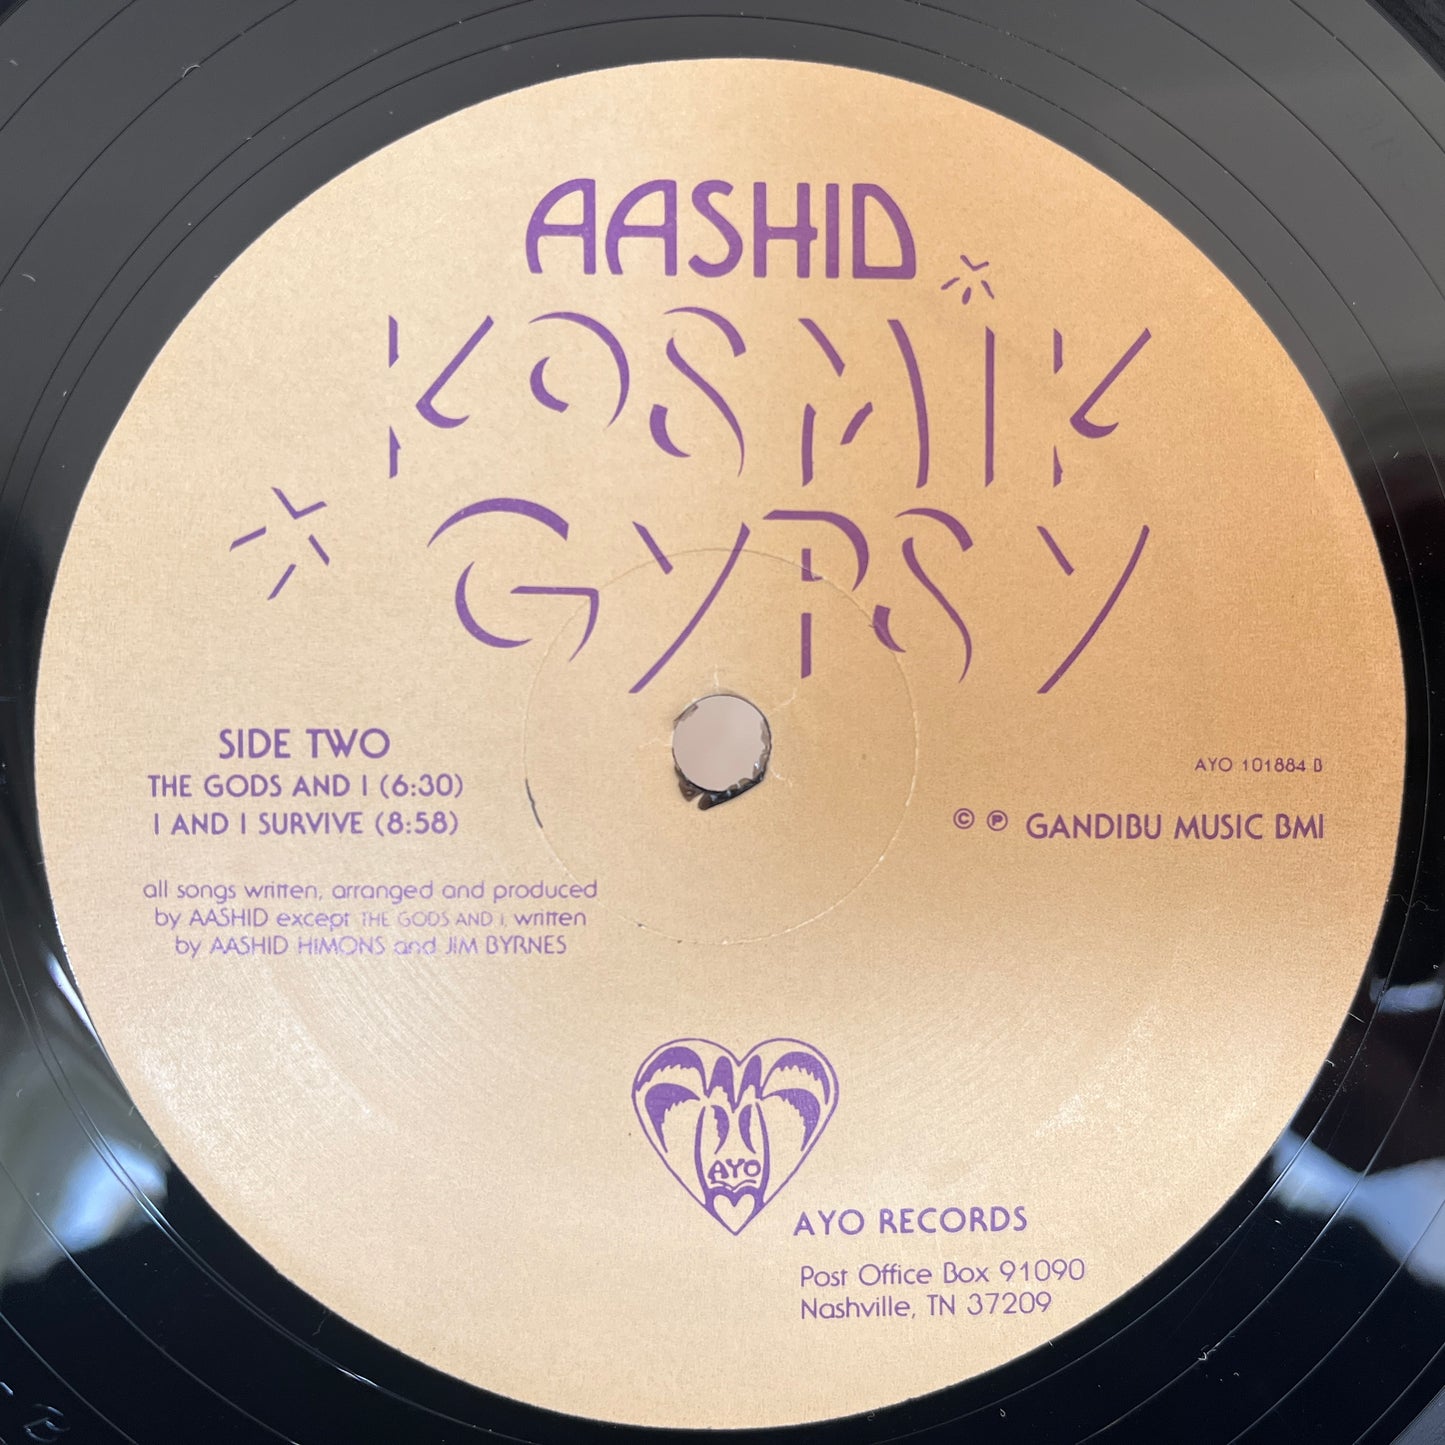 Aashid – Kosmik Gypsy